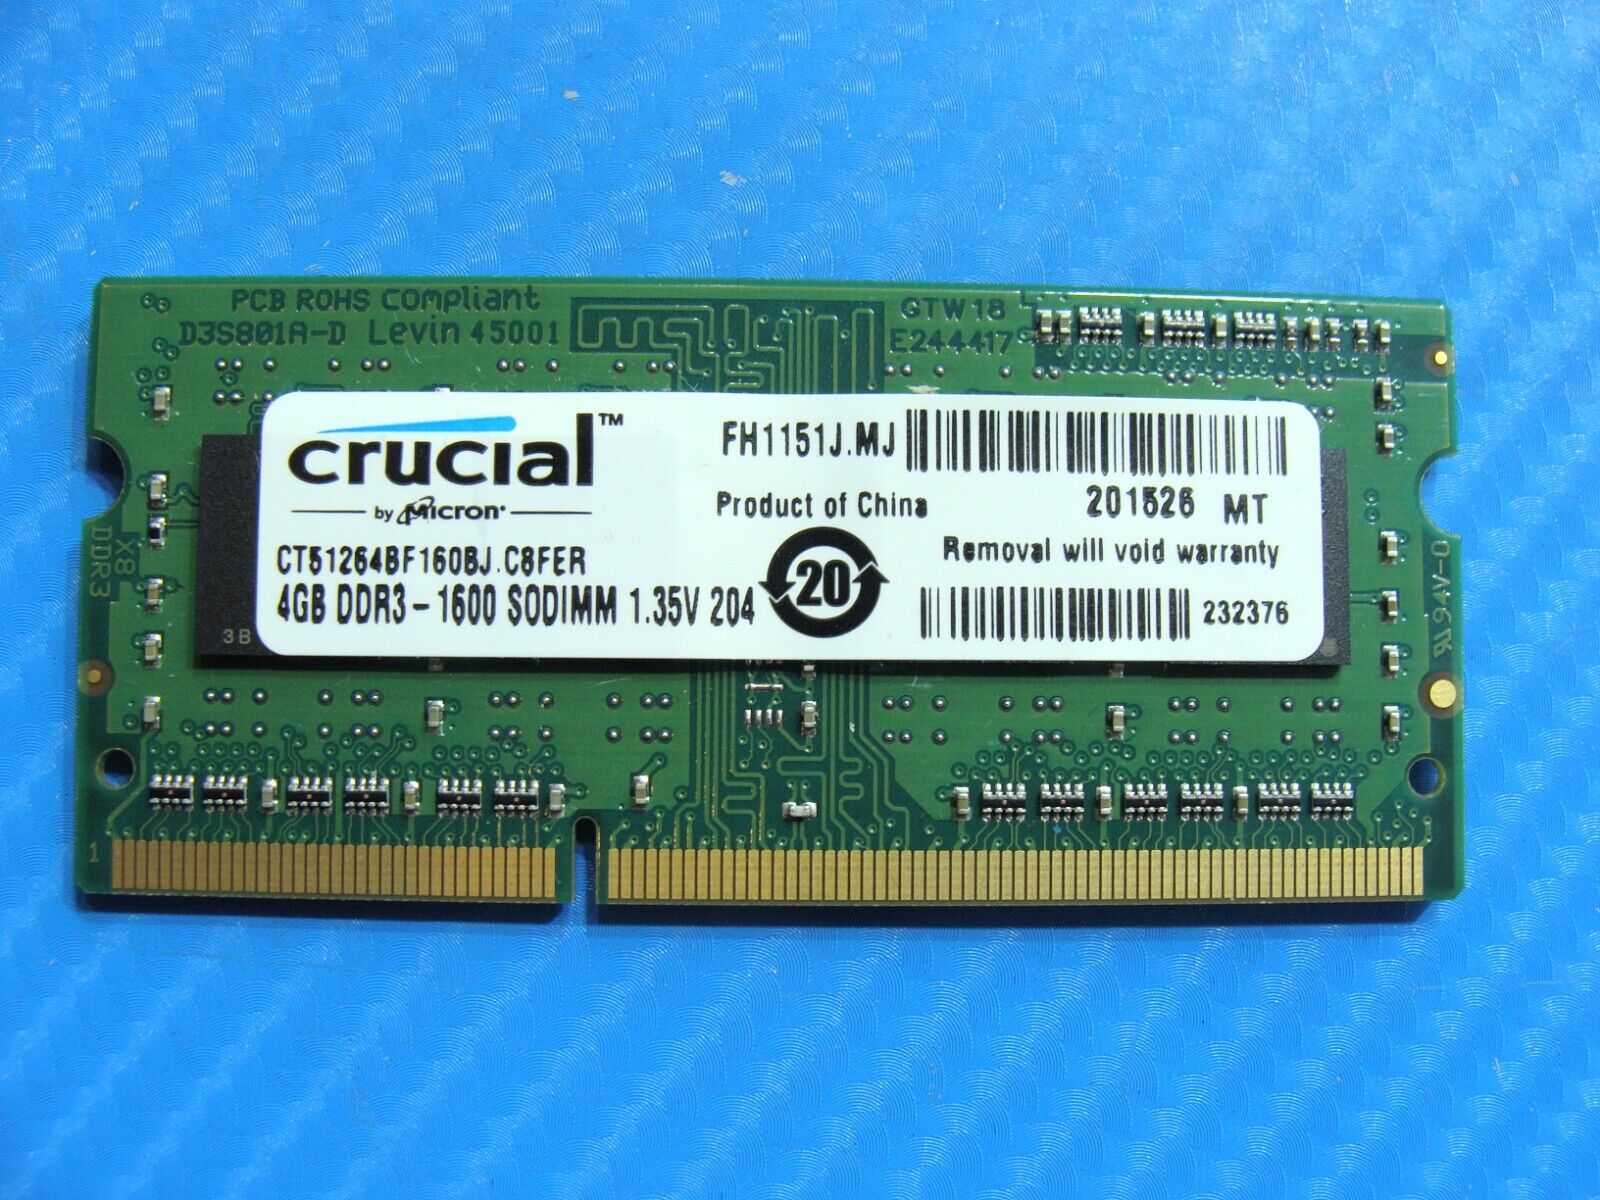 legeplads papir kaskade Lenovo T450s Crucial 4GB DDR3-1600 SO-DIMM Memory RAM CT51264BF160BJ.C8FER